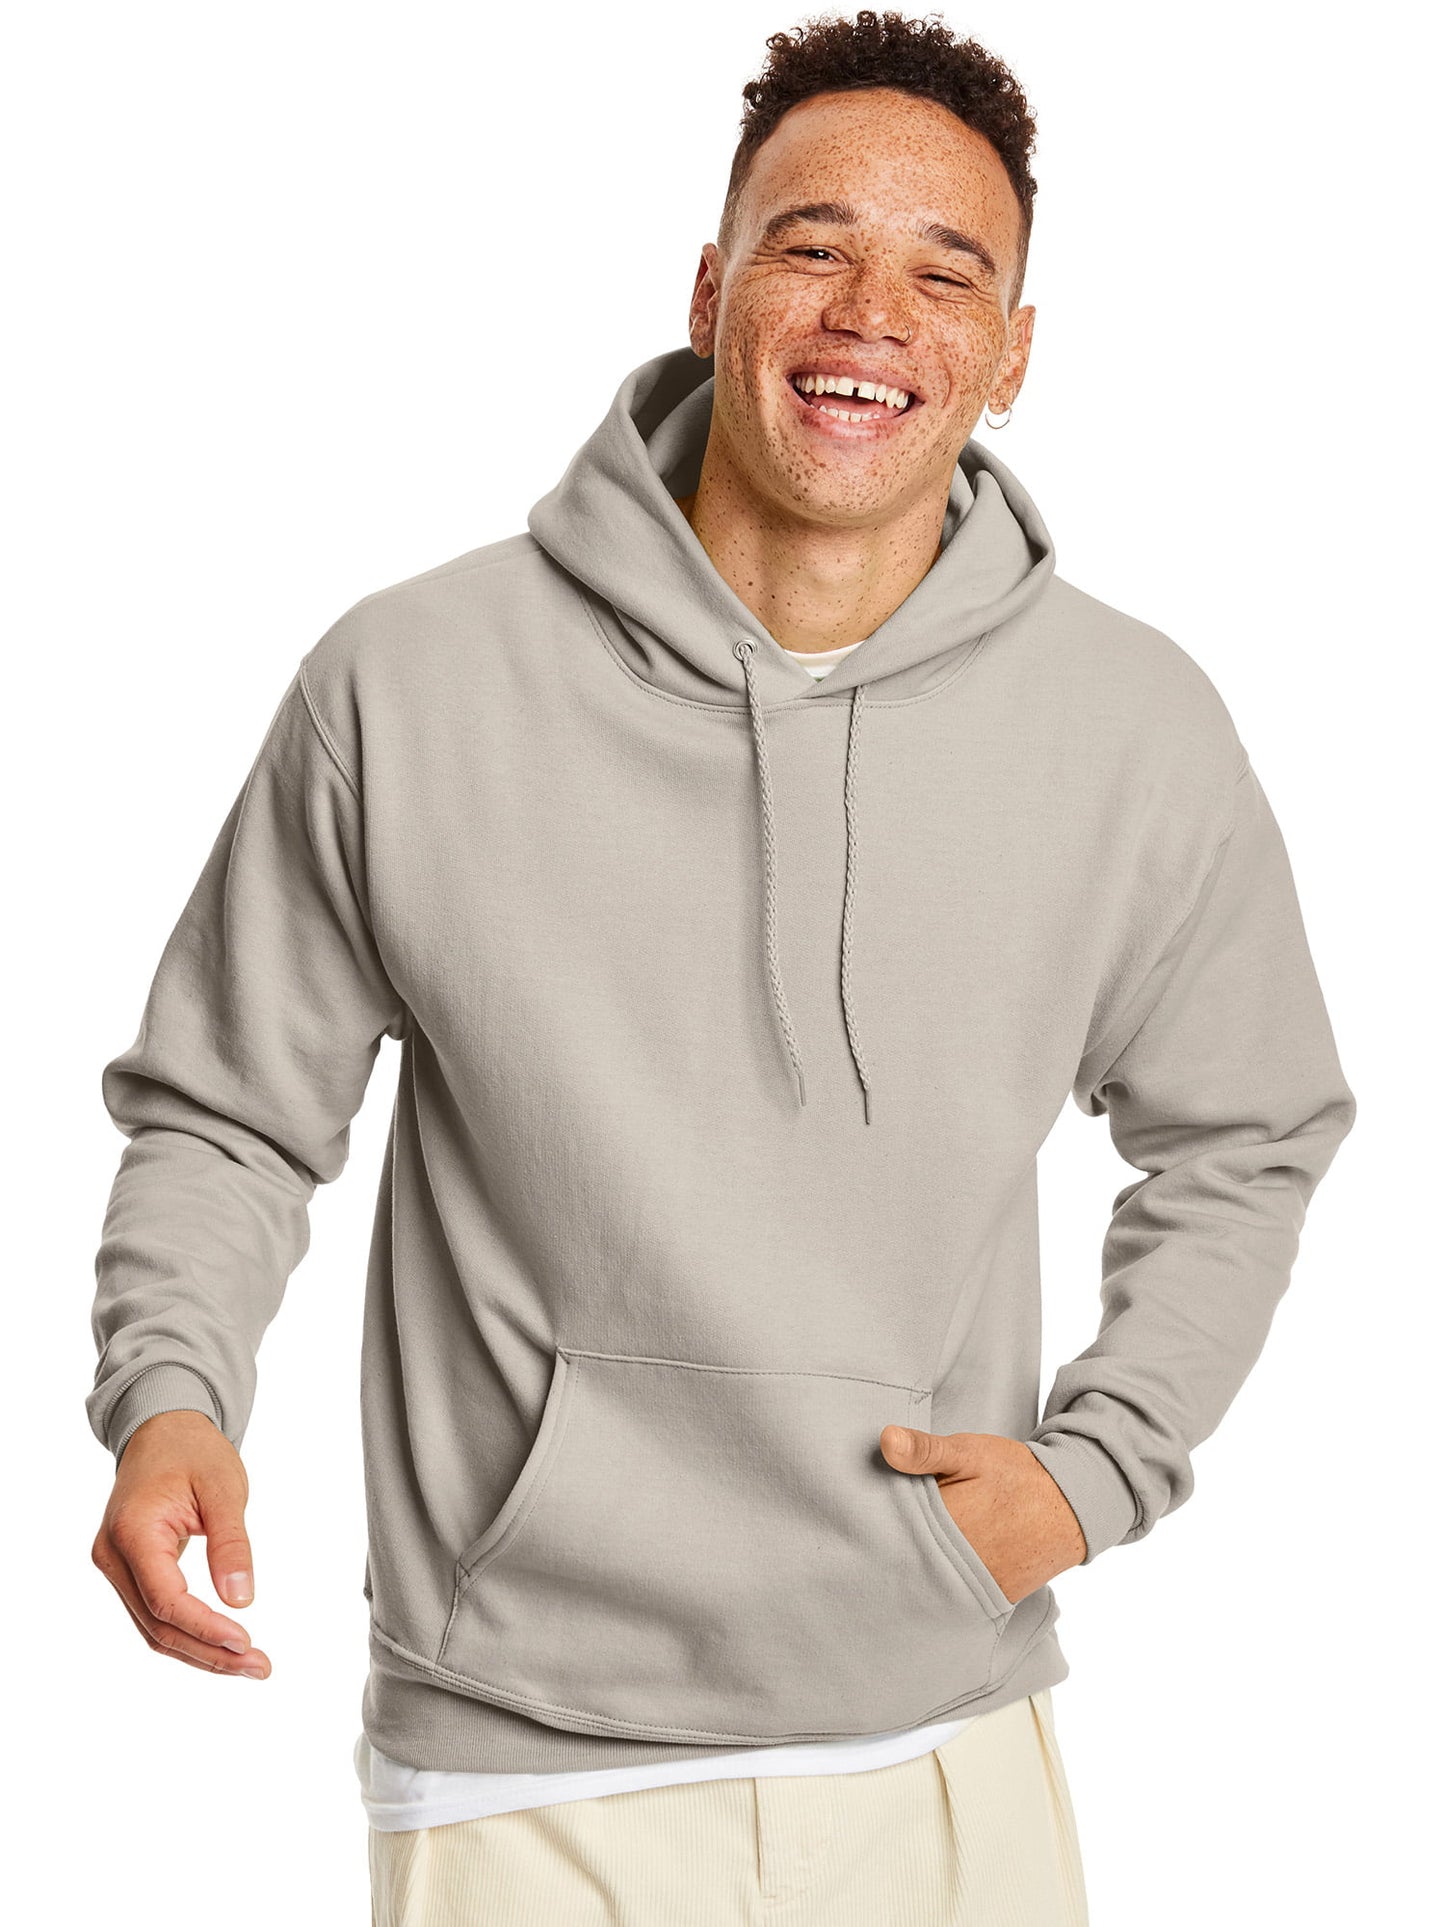 Hanes Long Sleeve Pullover Active Fit Hoodie (Men's), 1 Pack